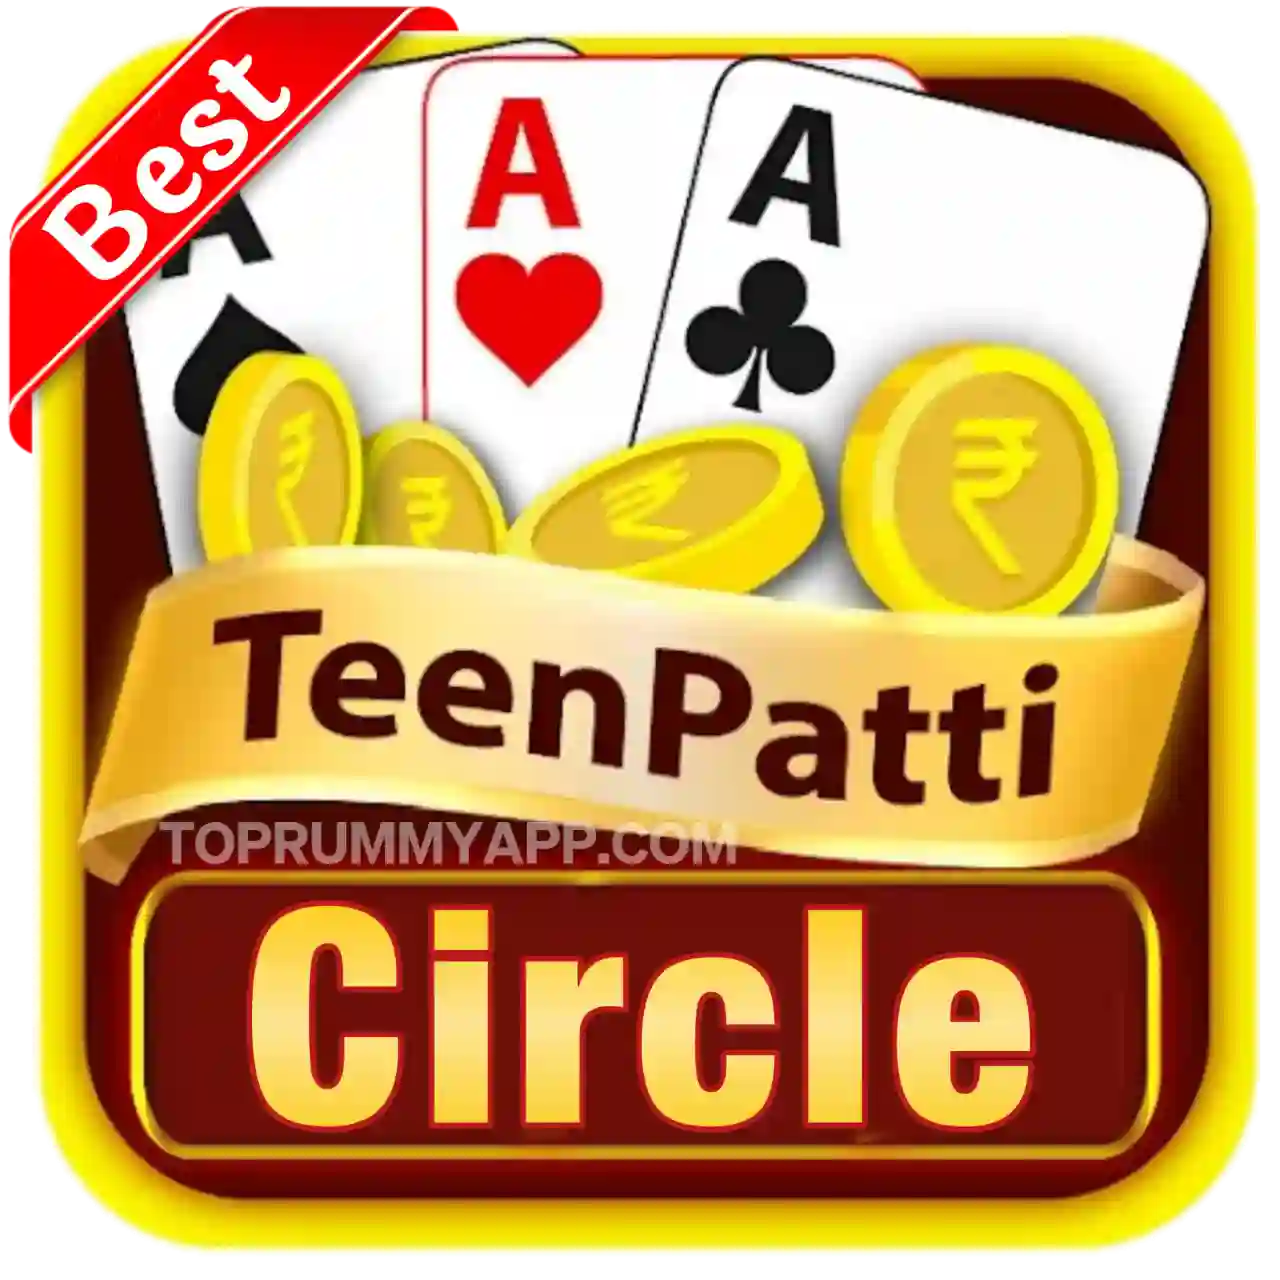 Teen Patti Circle App Download - Teen Patti Royal Apk Download